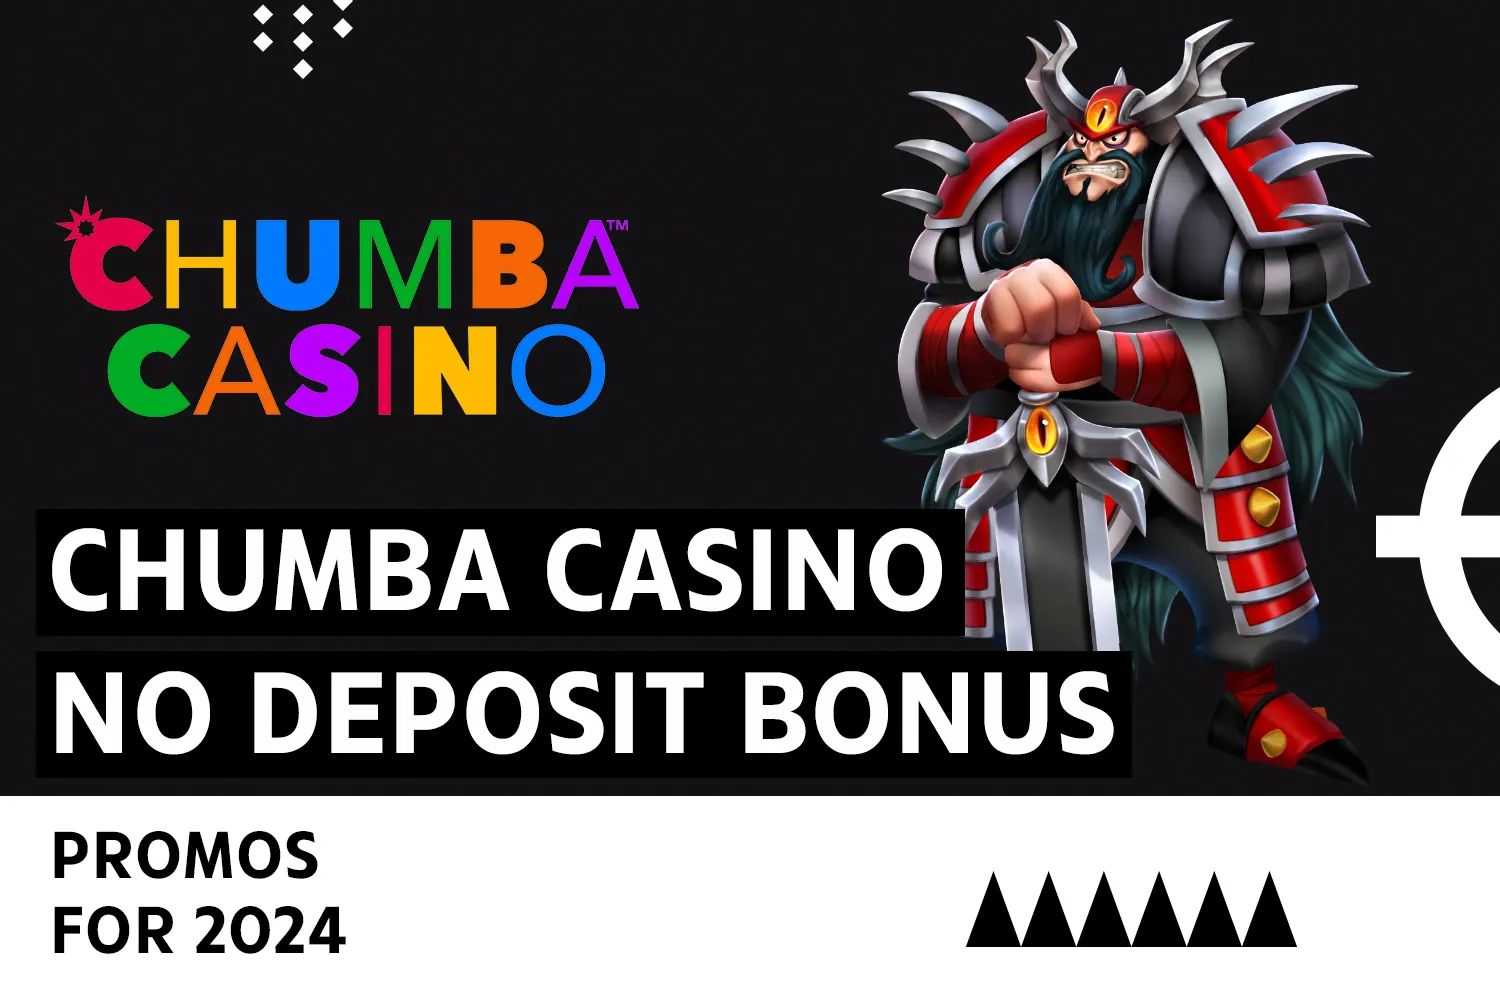 Chumba Casino no deposit bonus 2024 | Get 2 FREE SC